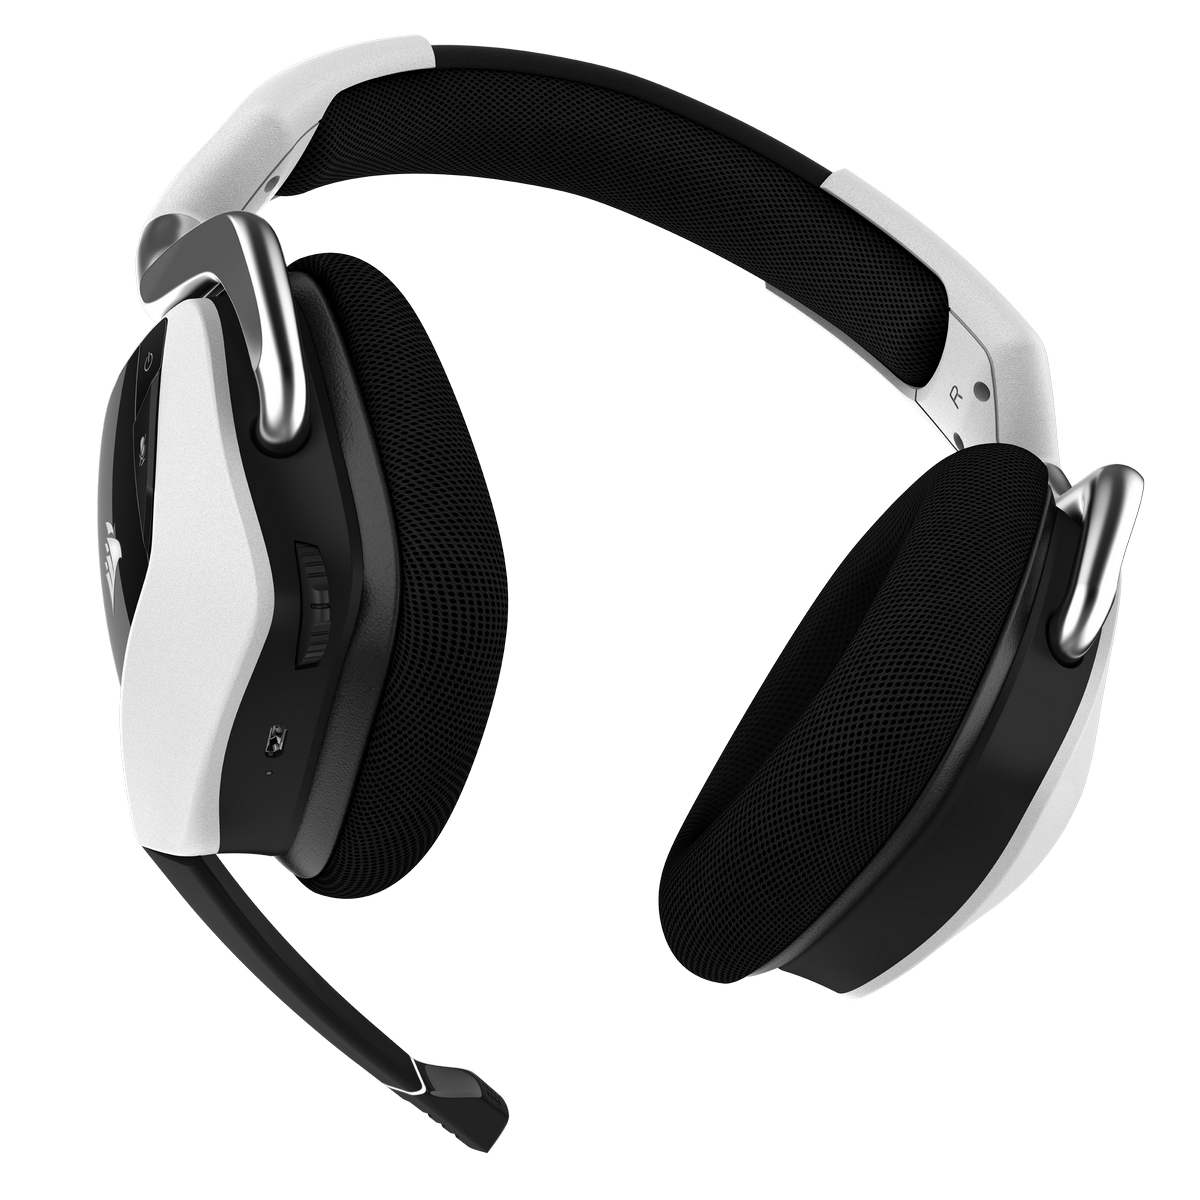 CORSAIR - Corsair GAMING VOID RGB ELITE Wireless Premium Gaming Headset with 7.1 Surround Sound, White (CA-901